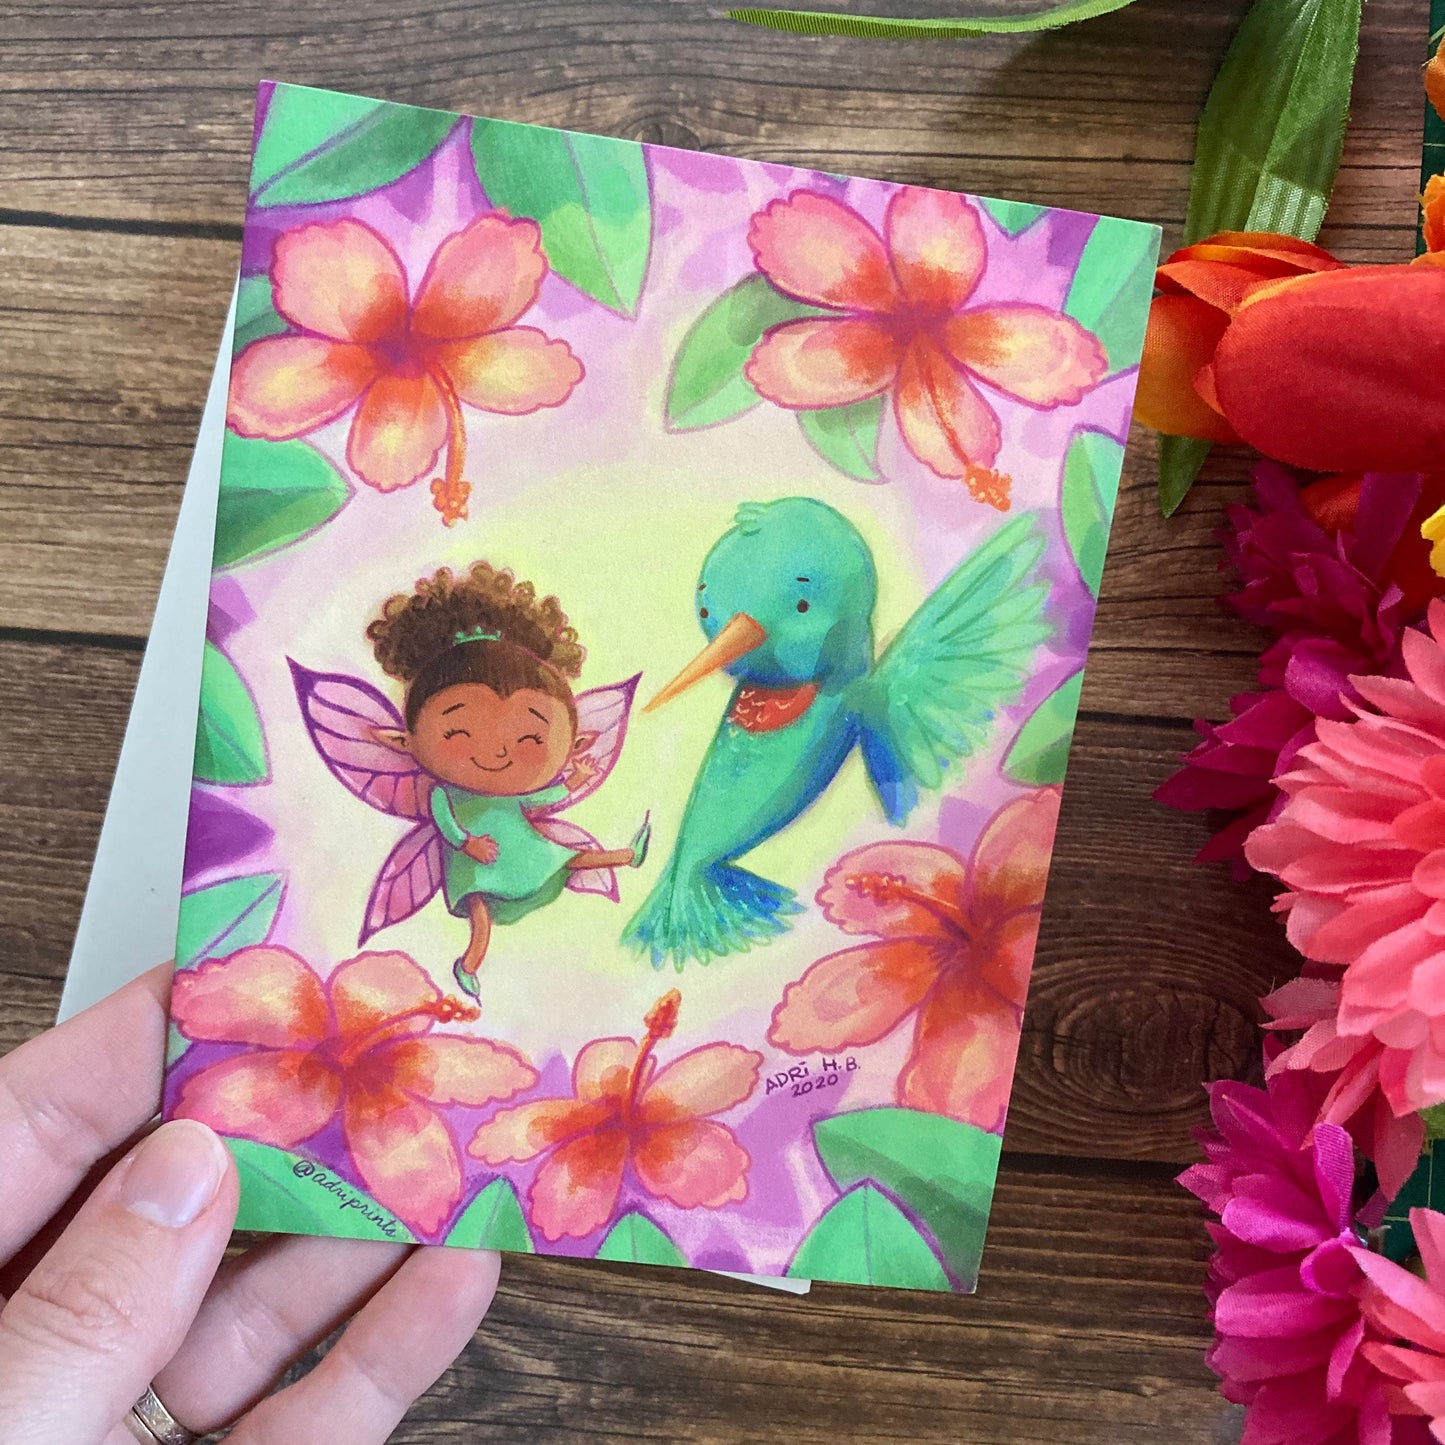 EVERYDAY - Hummingbird Flower Fairy - Greeting Card for Friends, Family, art by Adriana Bergstrom (Adriprints)